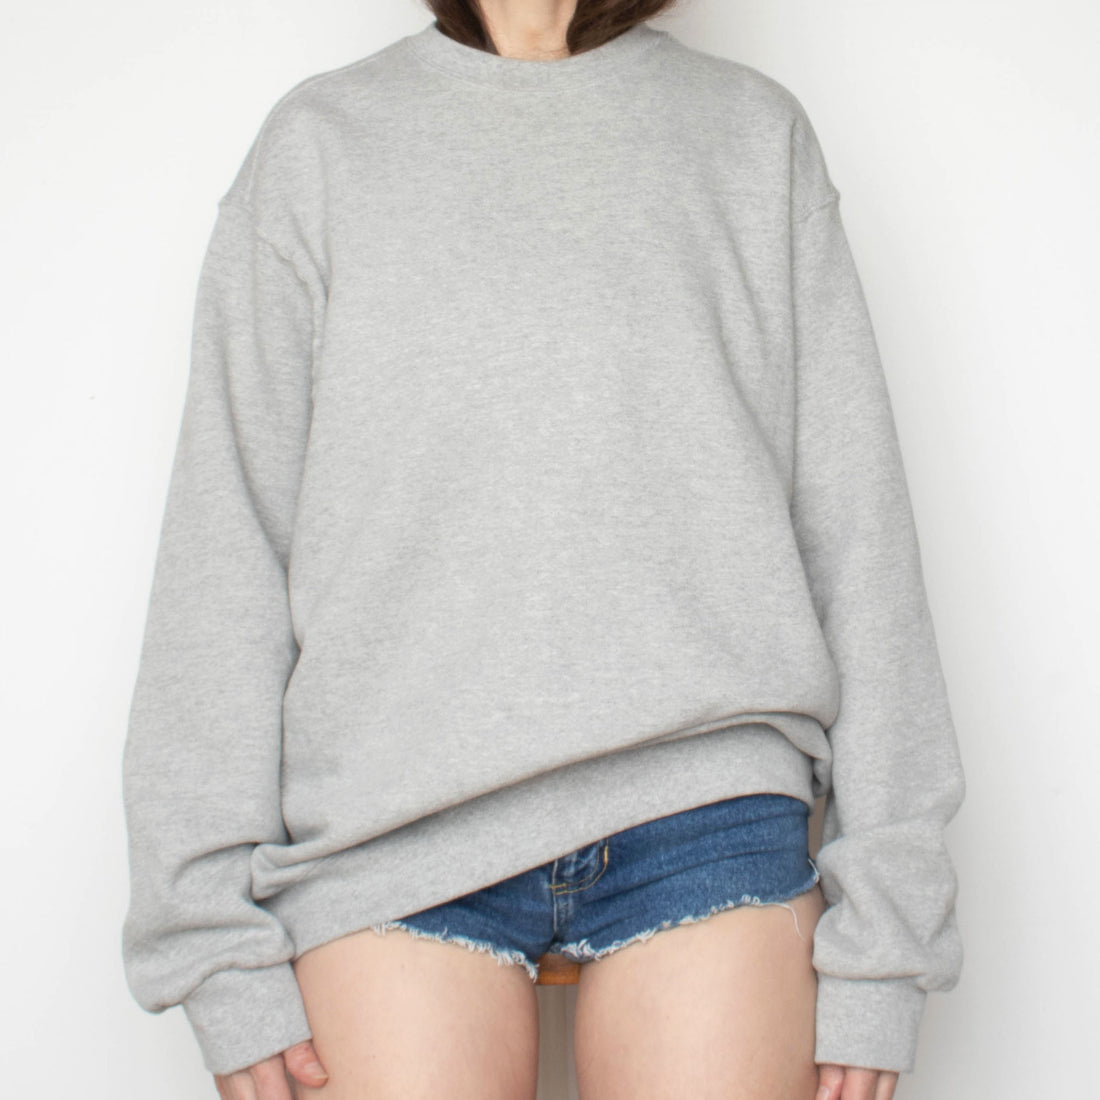 90s Soft Grey Sweatshirt